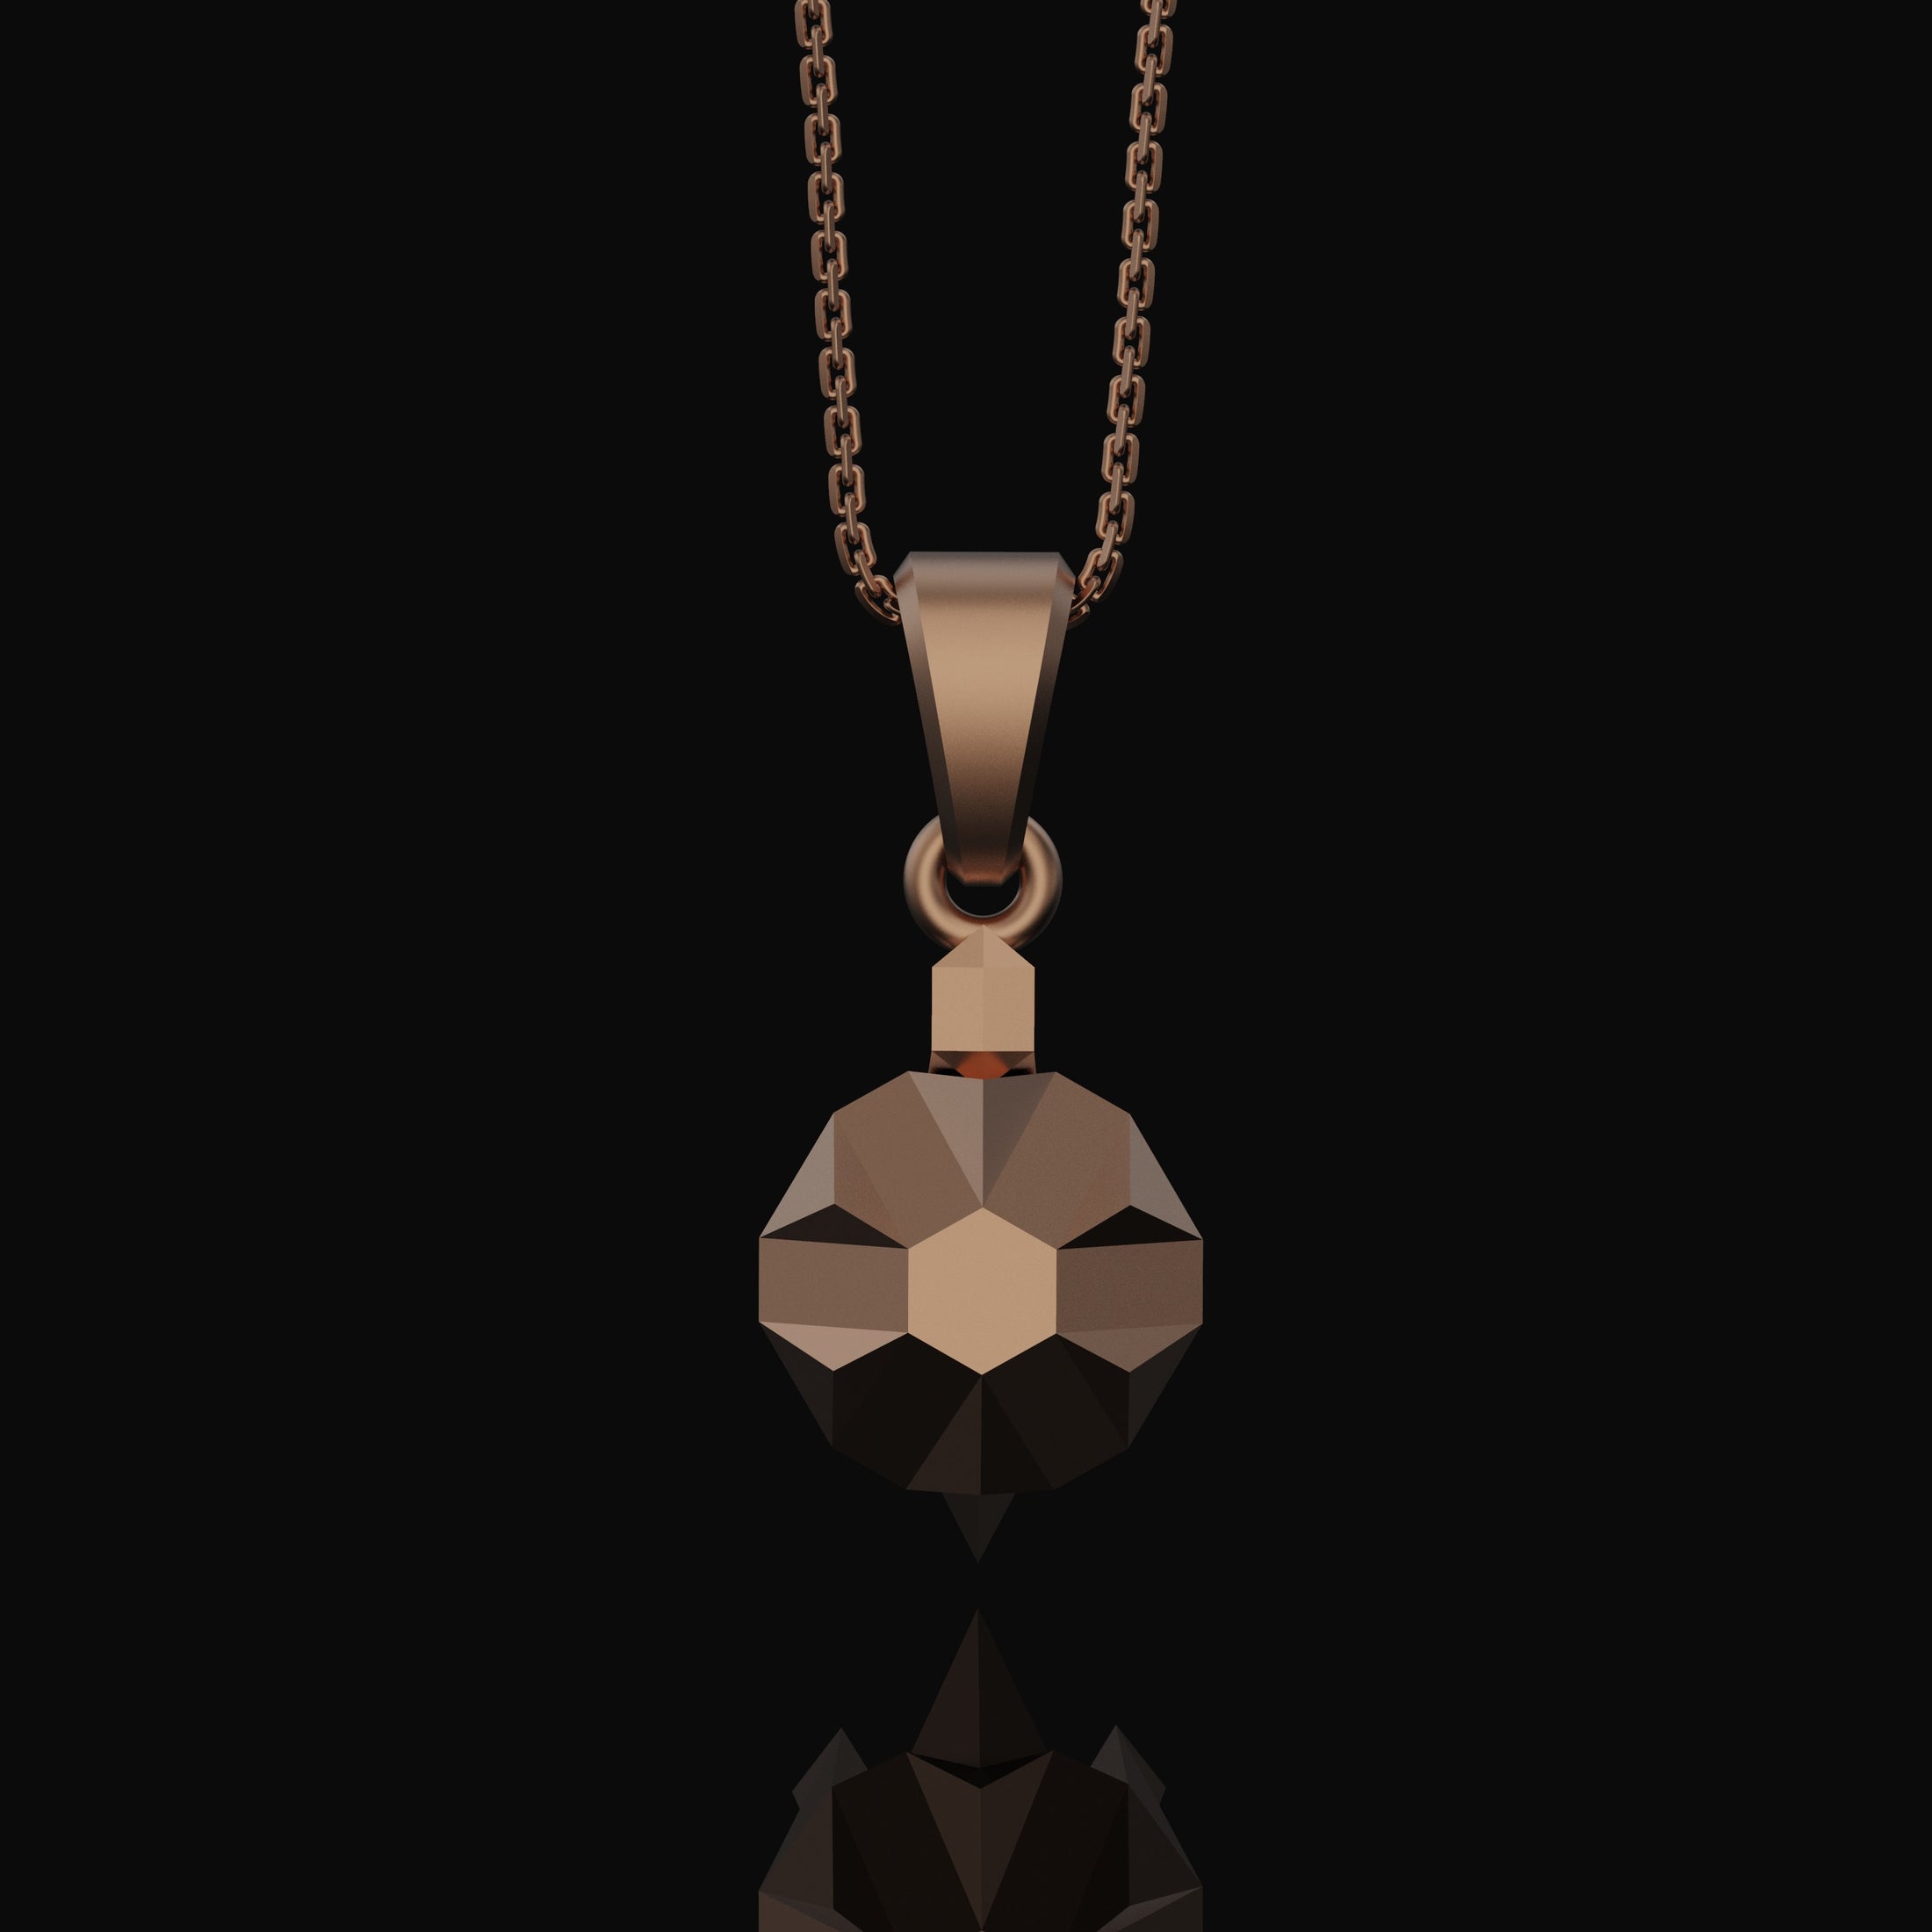 Origami Tortoise Charm Necklace - Silver Geometrical Pendant, Elegant Folded Turtle Design, Unique Artistic Jewelry Rose Gold Finish